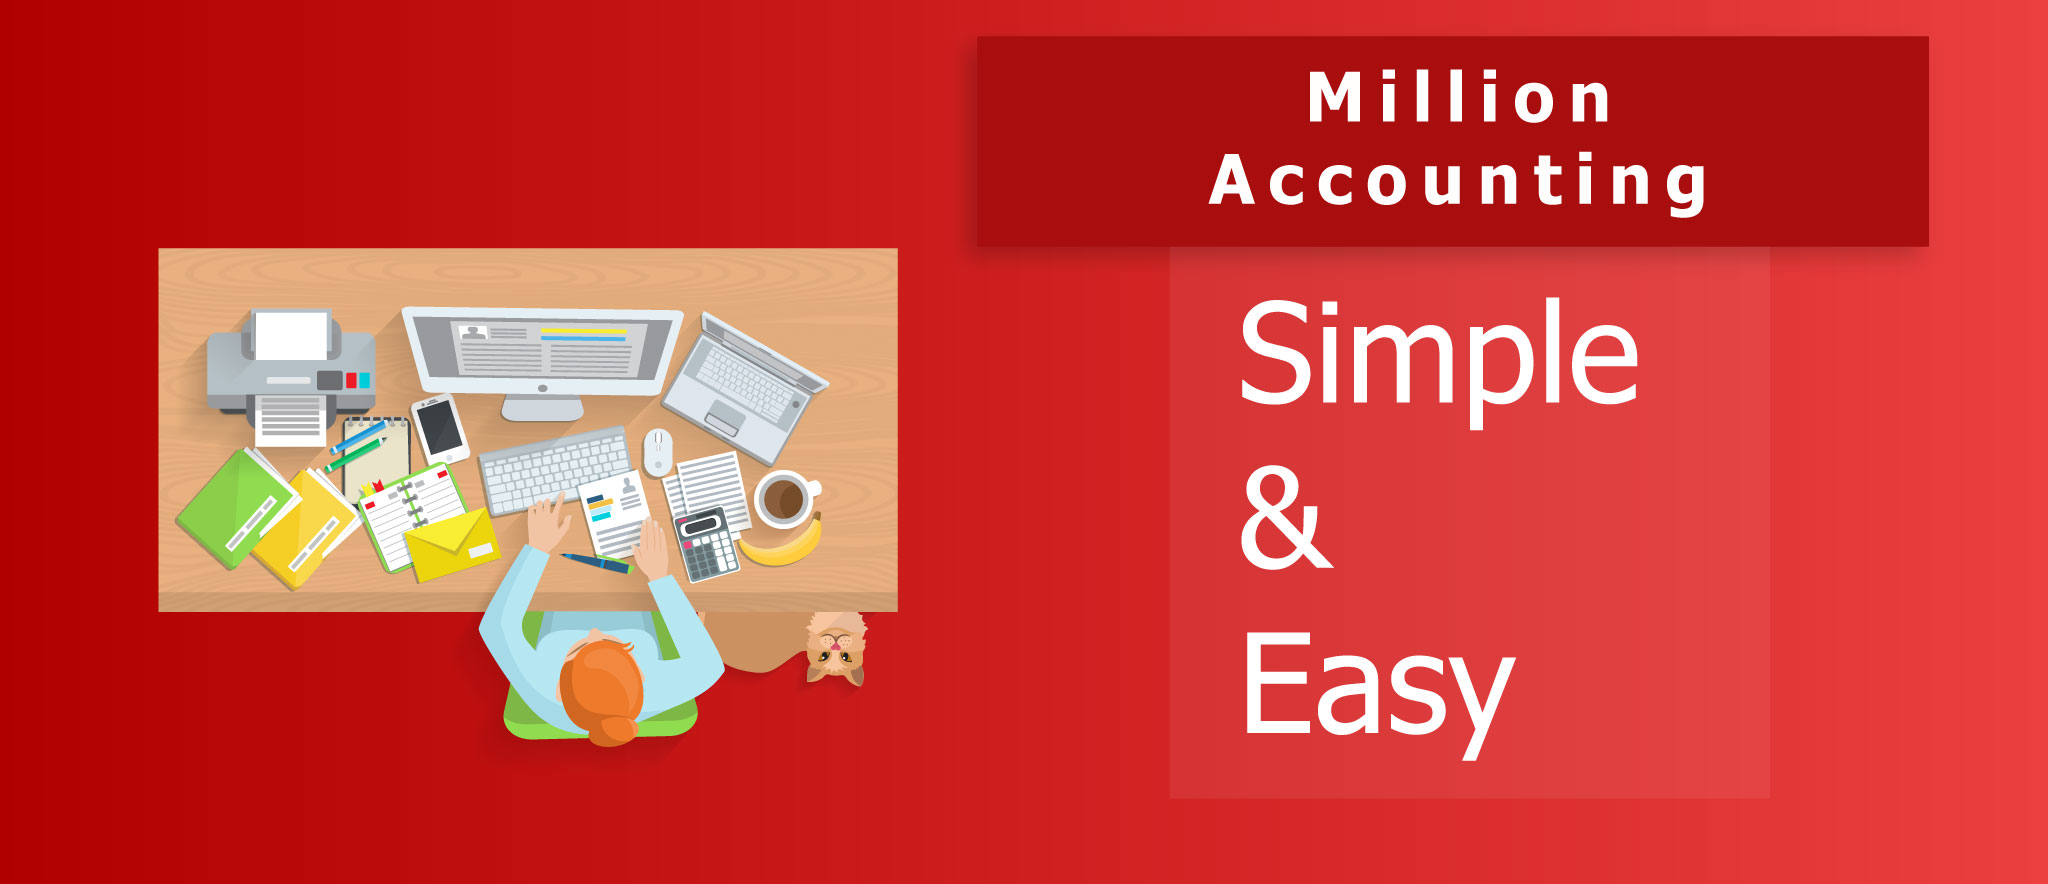 Million Accounting Slider 2